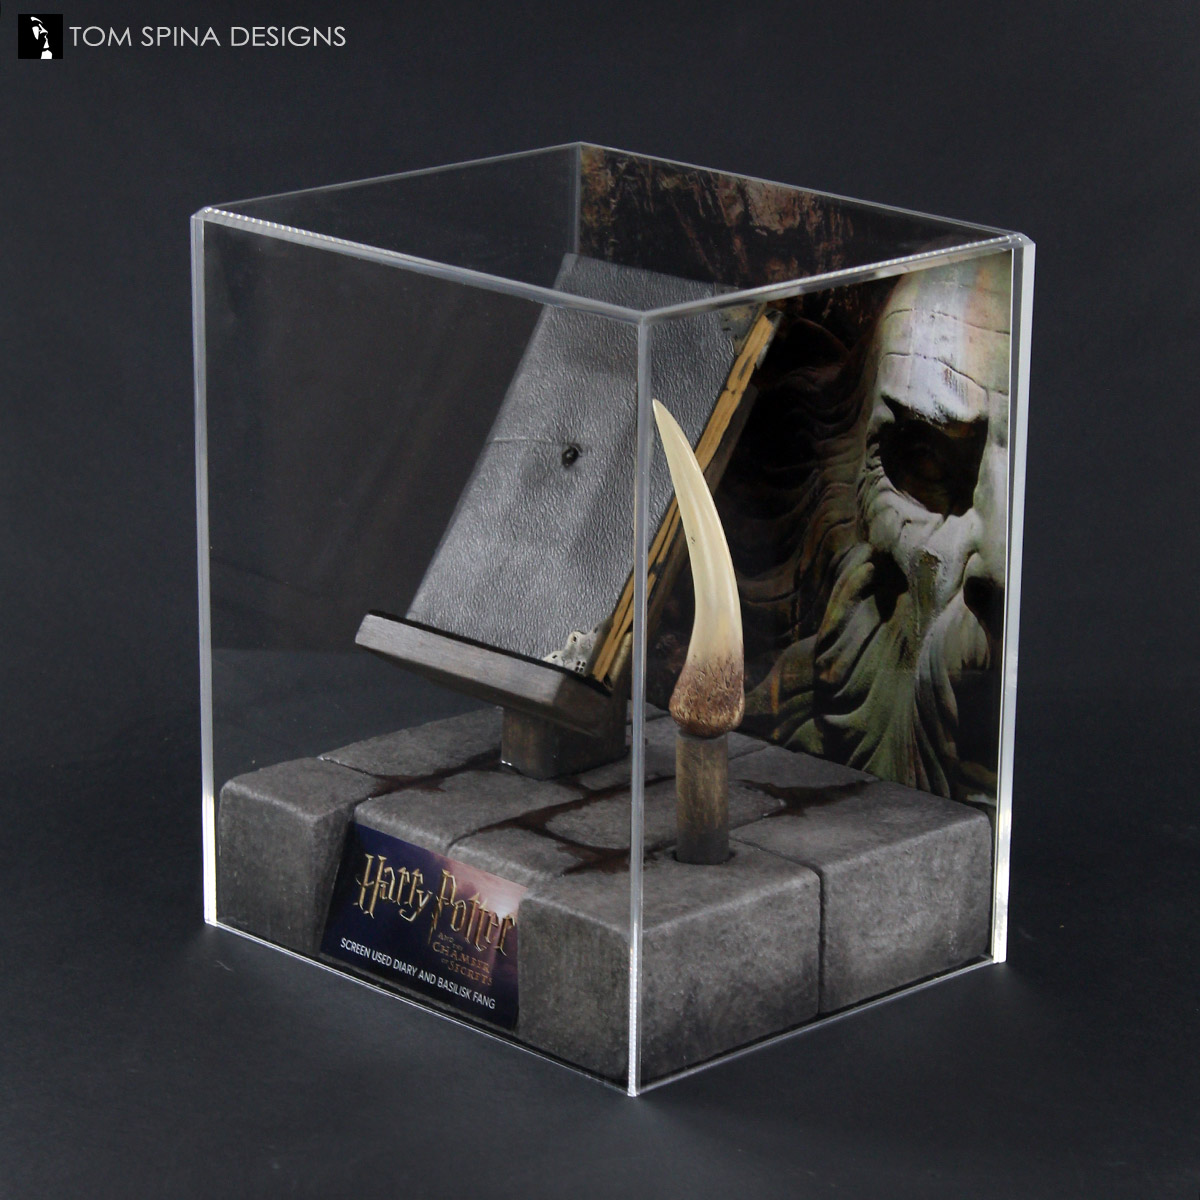 Harry Potter Props - Custom Themed Display - Tom Spina Designs » Tom Spina  Designs